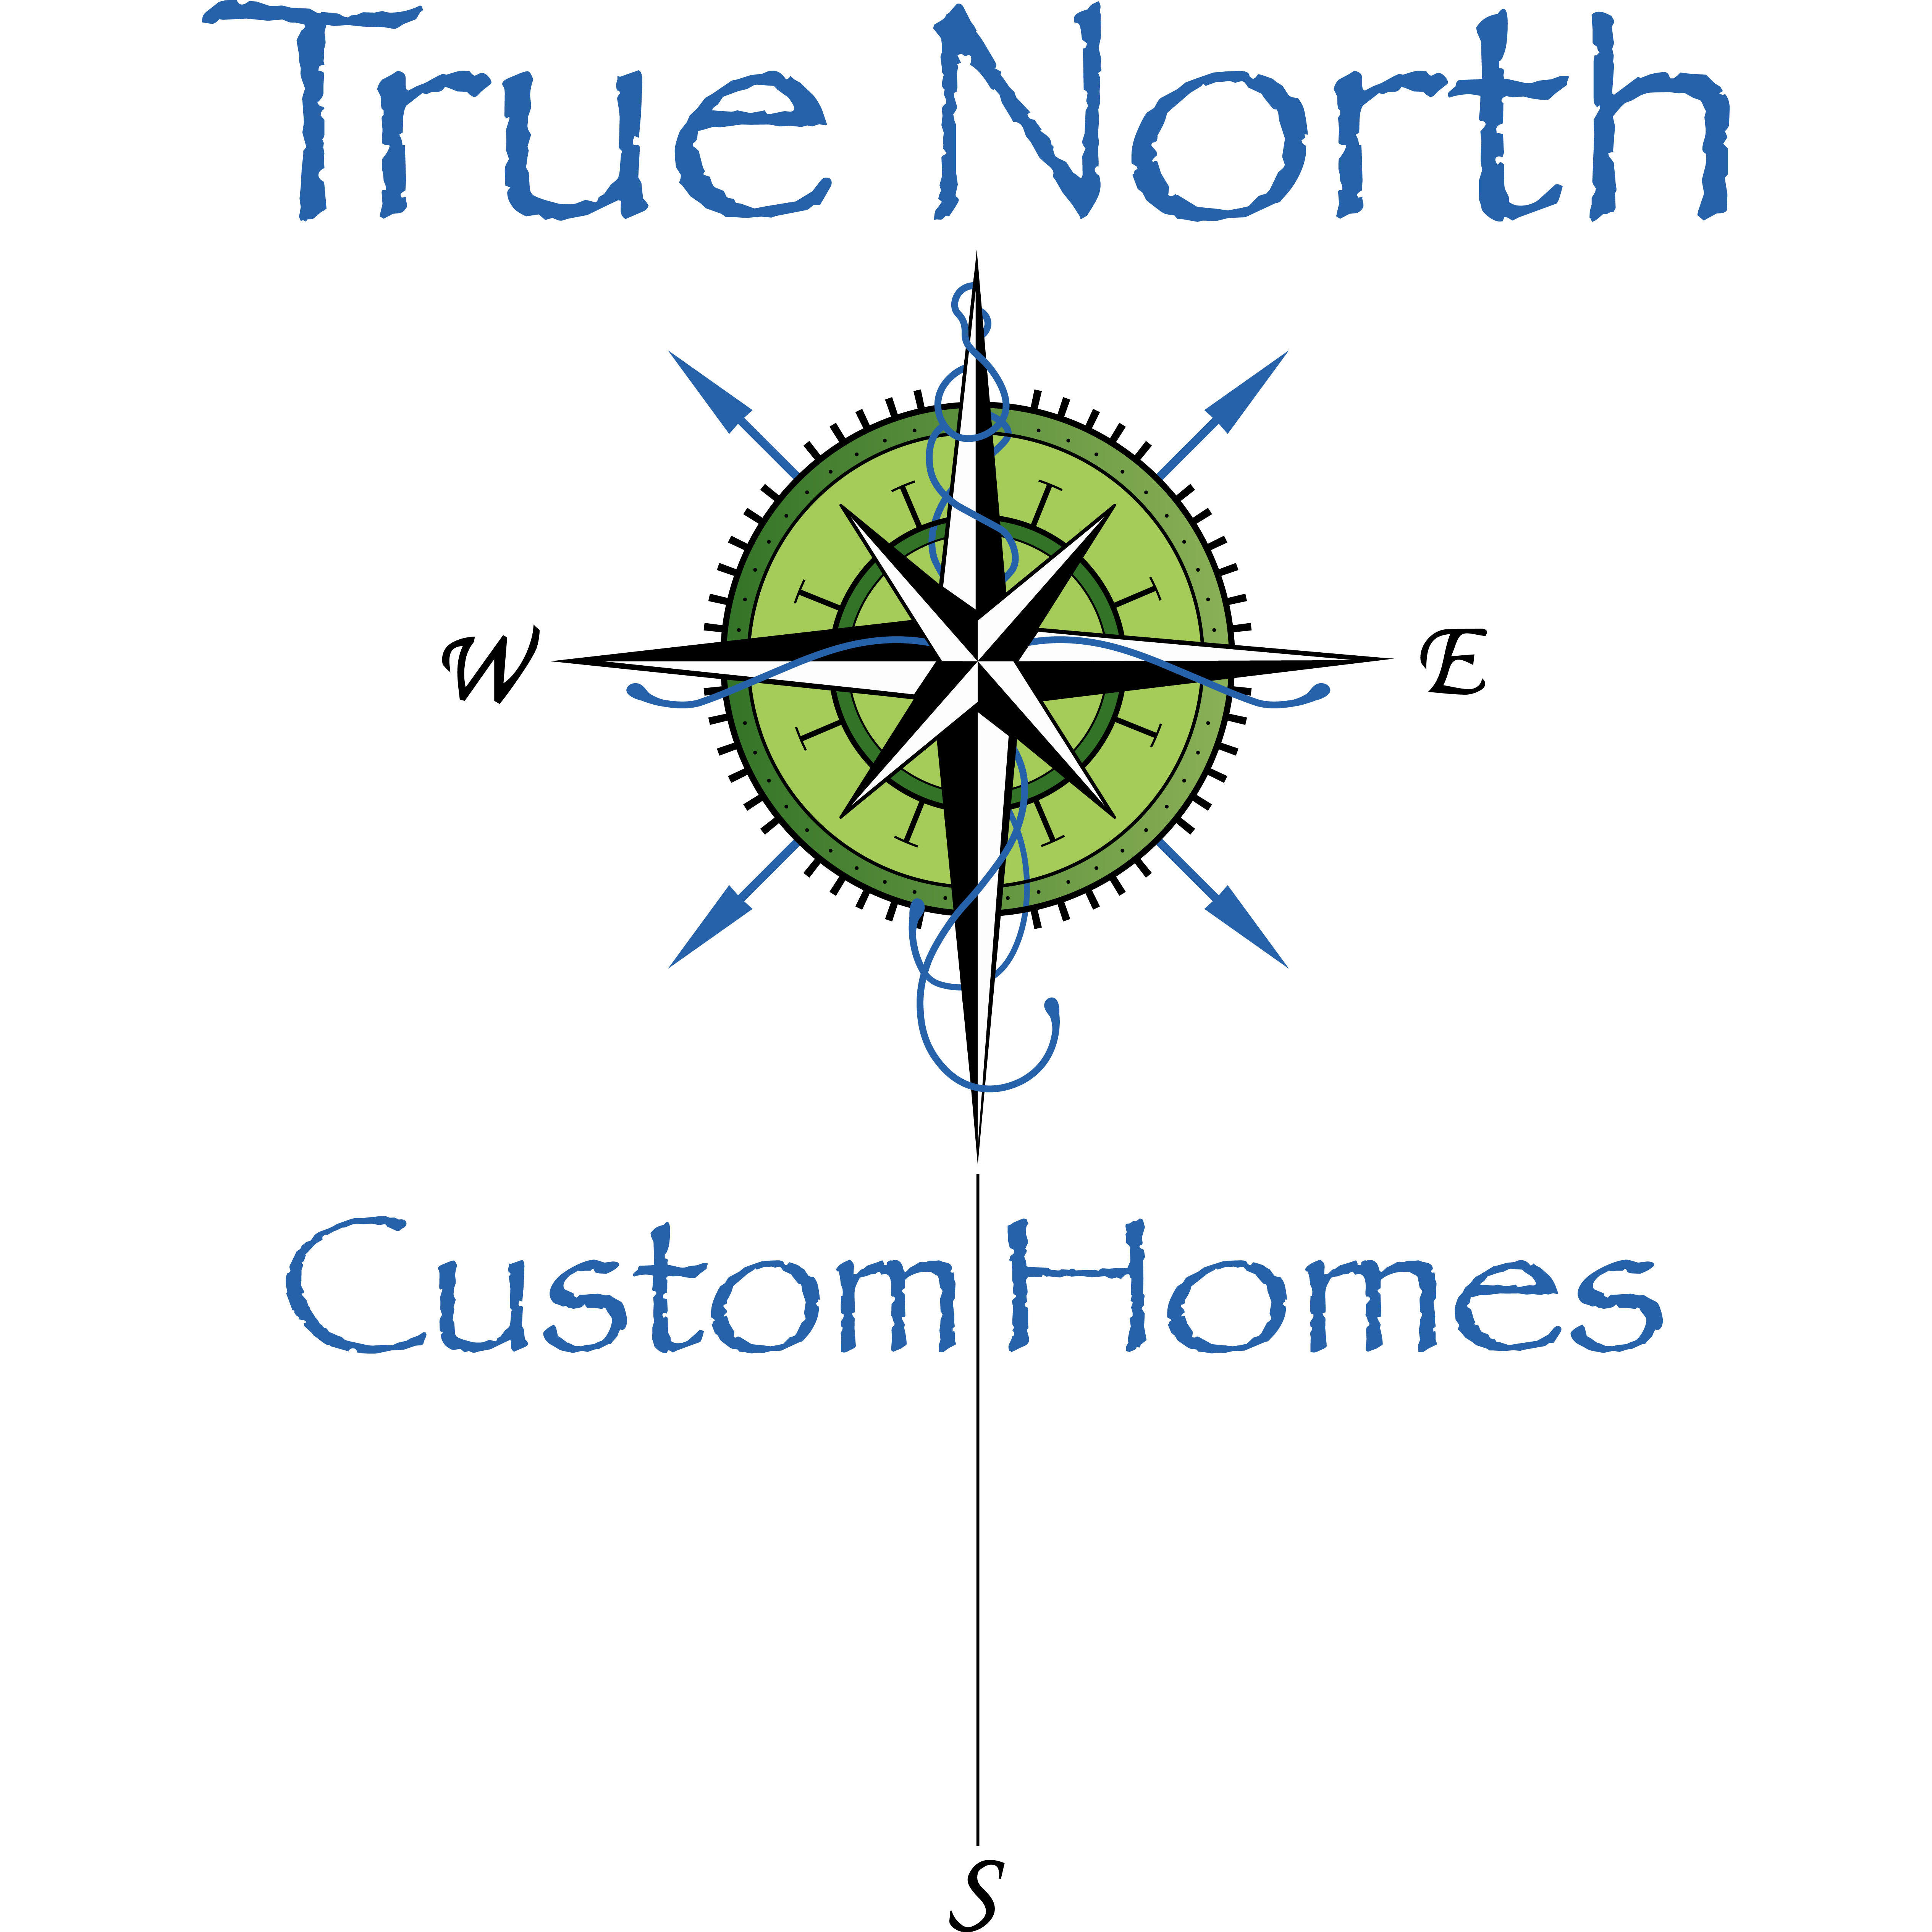 True North Custom Homes